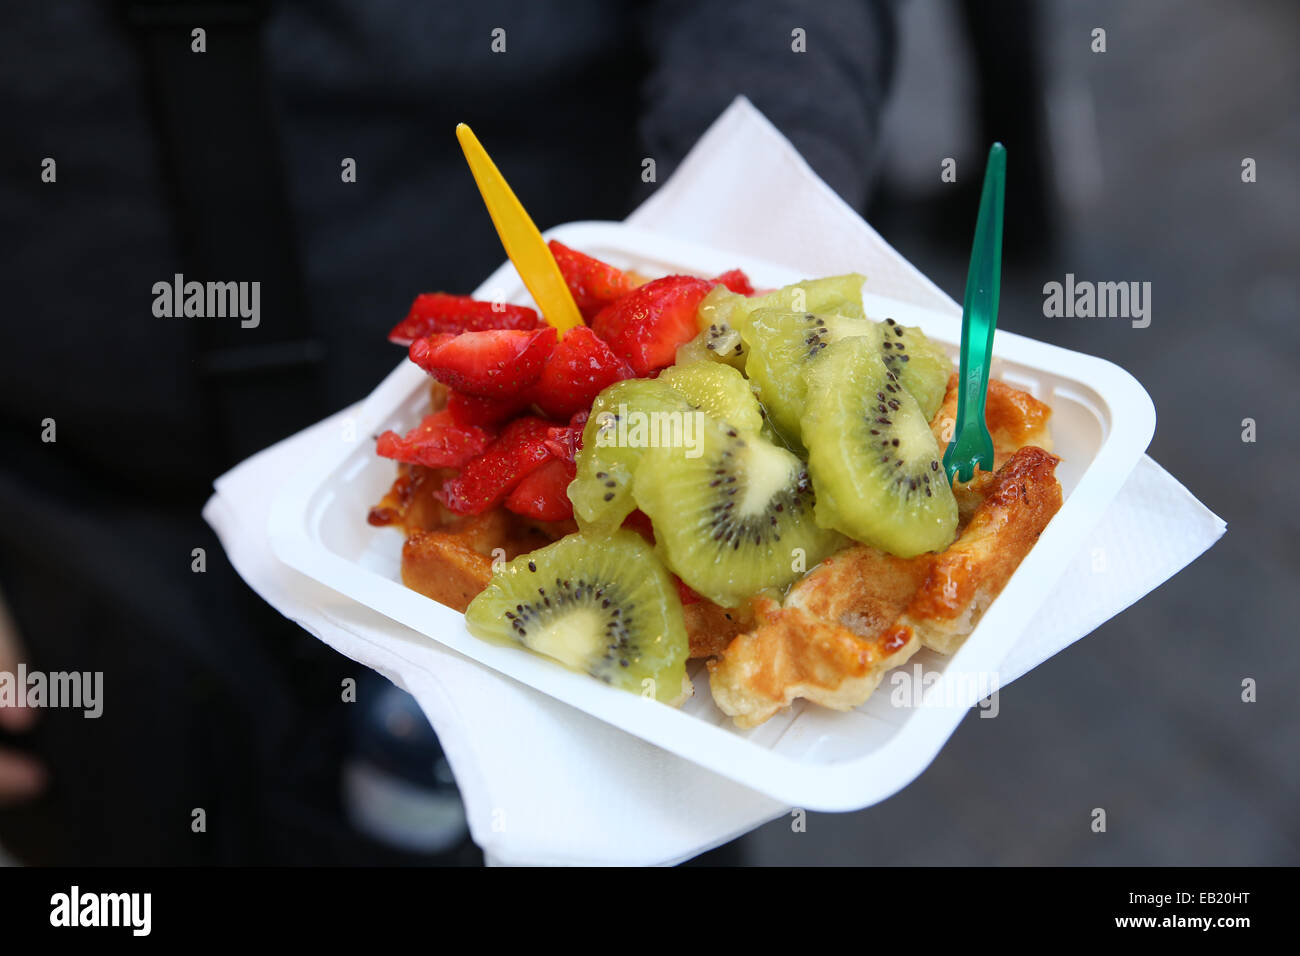 Belgische Waffeln Brüssel Topping Erdbeer Kiwi günstige touristische snack Stockfoto